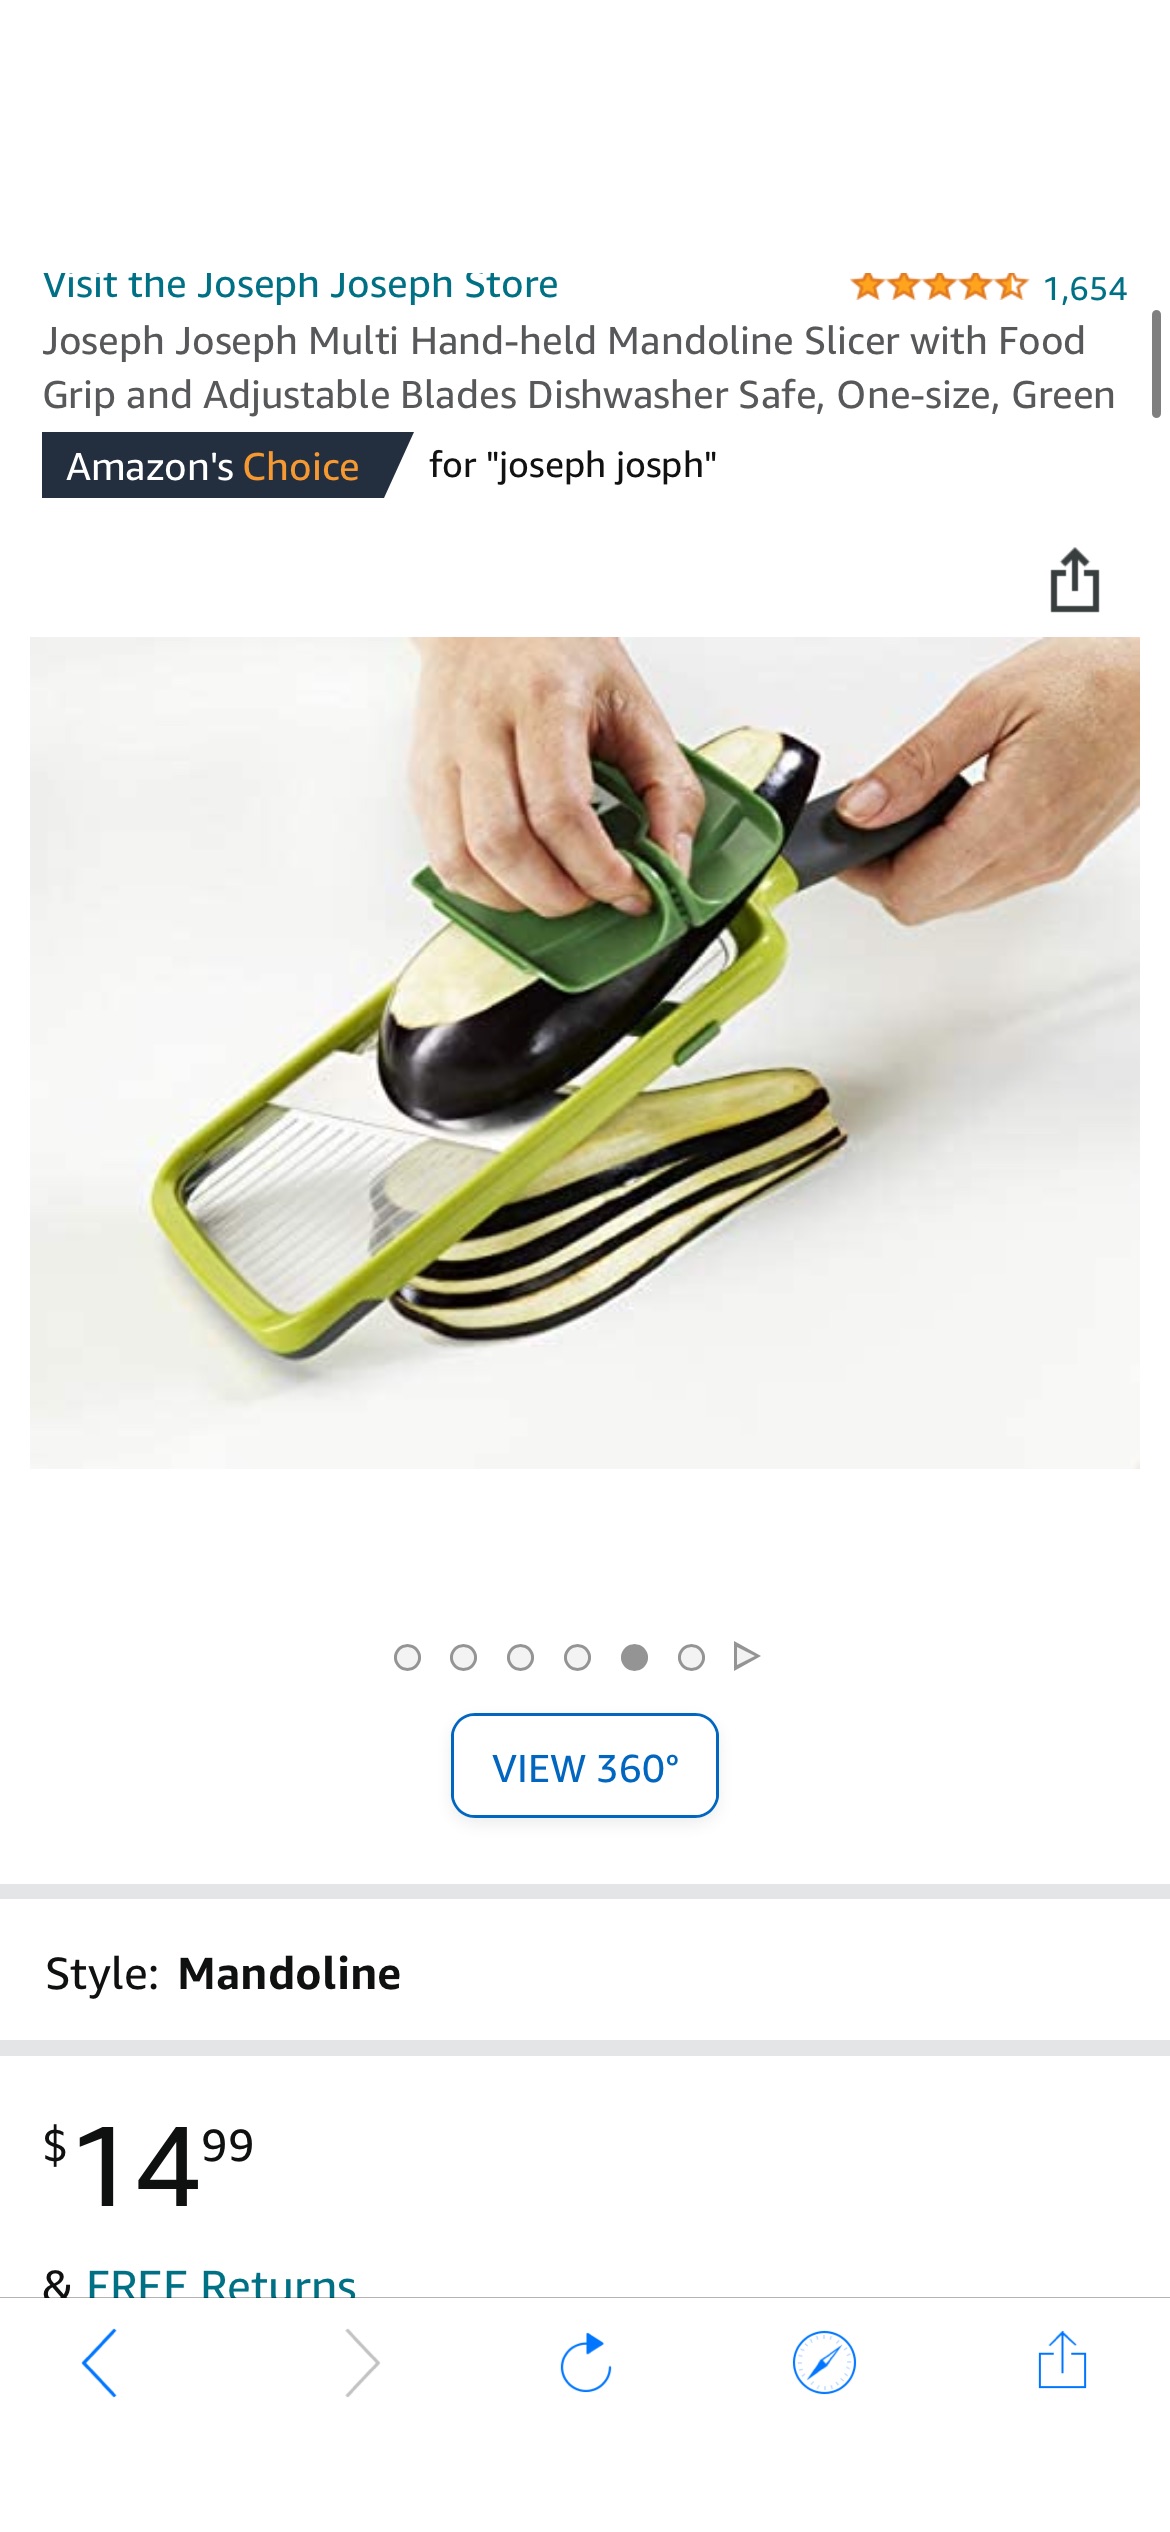 Amazon.com: Joseph Joseph Multi Hand-held Mandoline Slicer with Food Grip and Adjustable Blades Dishwasher Safe, One-size, Green: Home & Kitchen 切片器